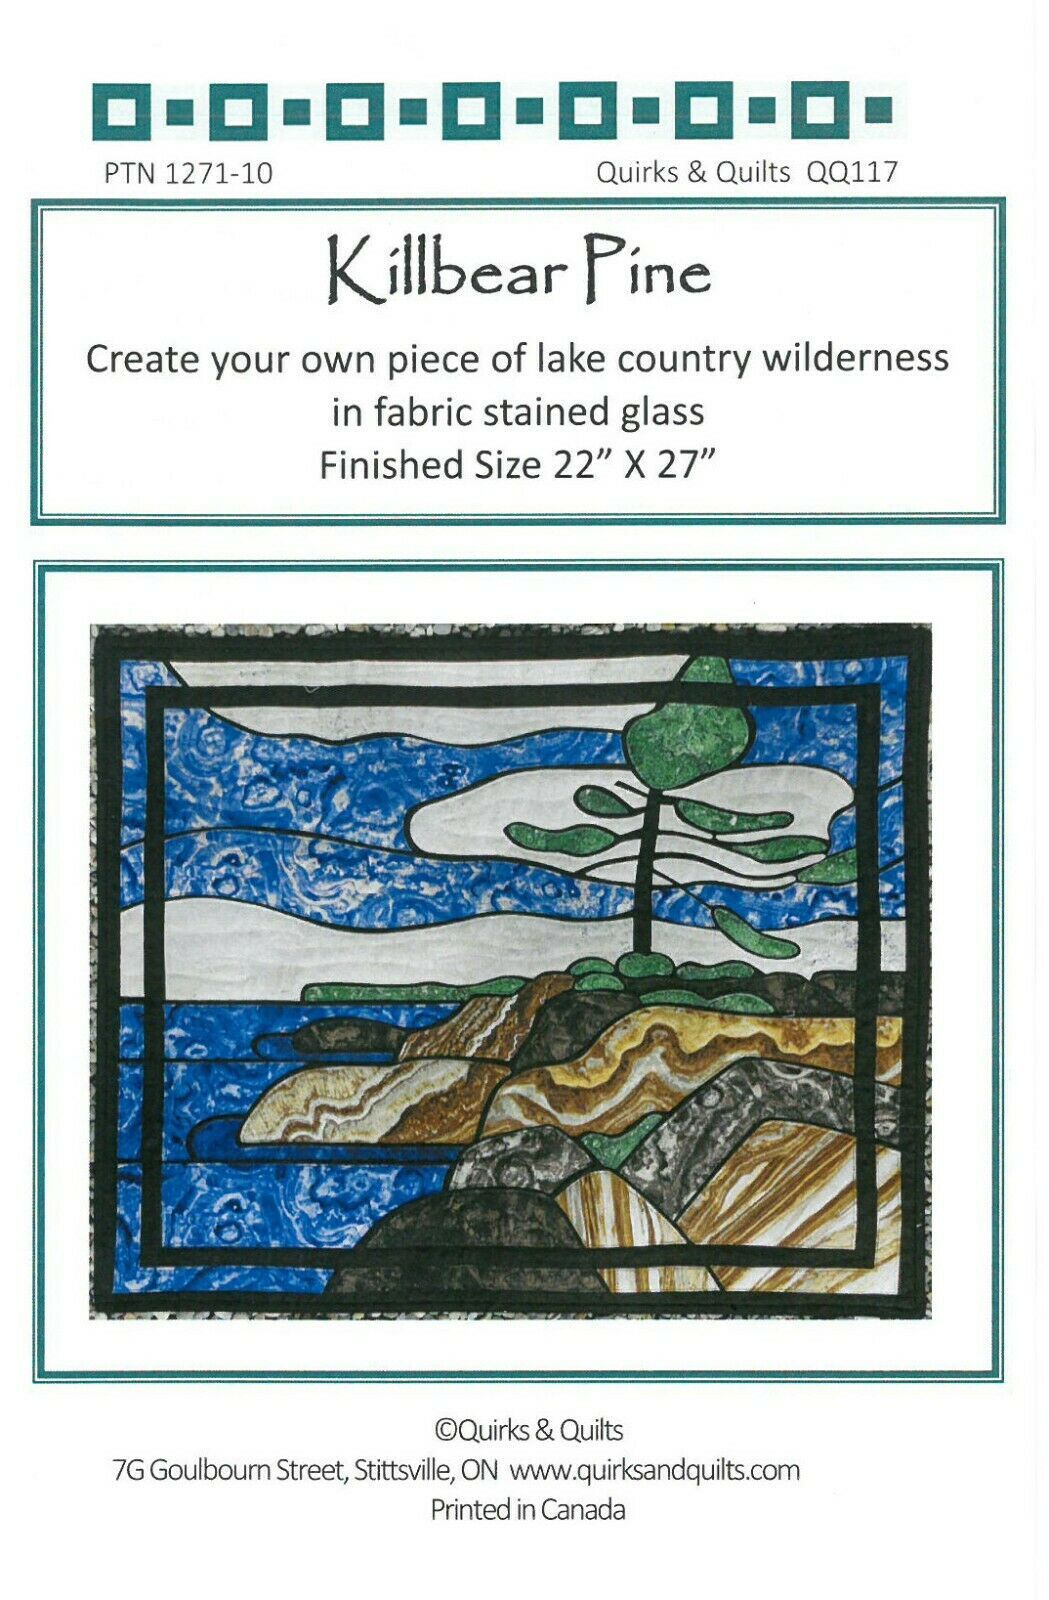 Quilt Kit - Killbear Pine 22" x 27" Lake Wilderness Nature Quilting Kit M411.03 - $39.97